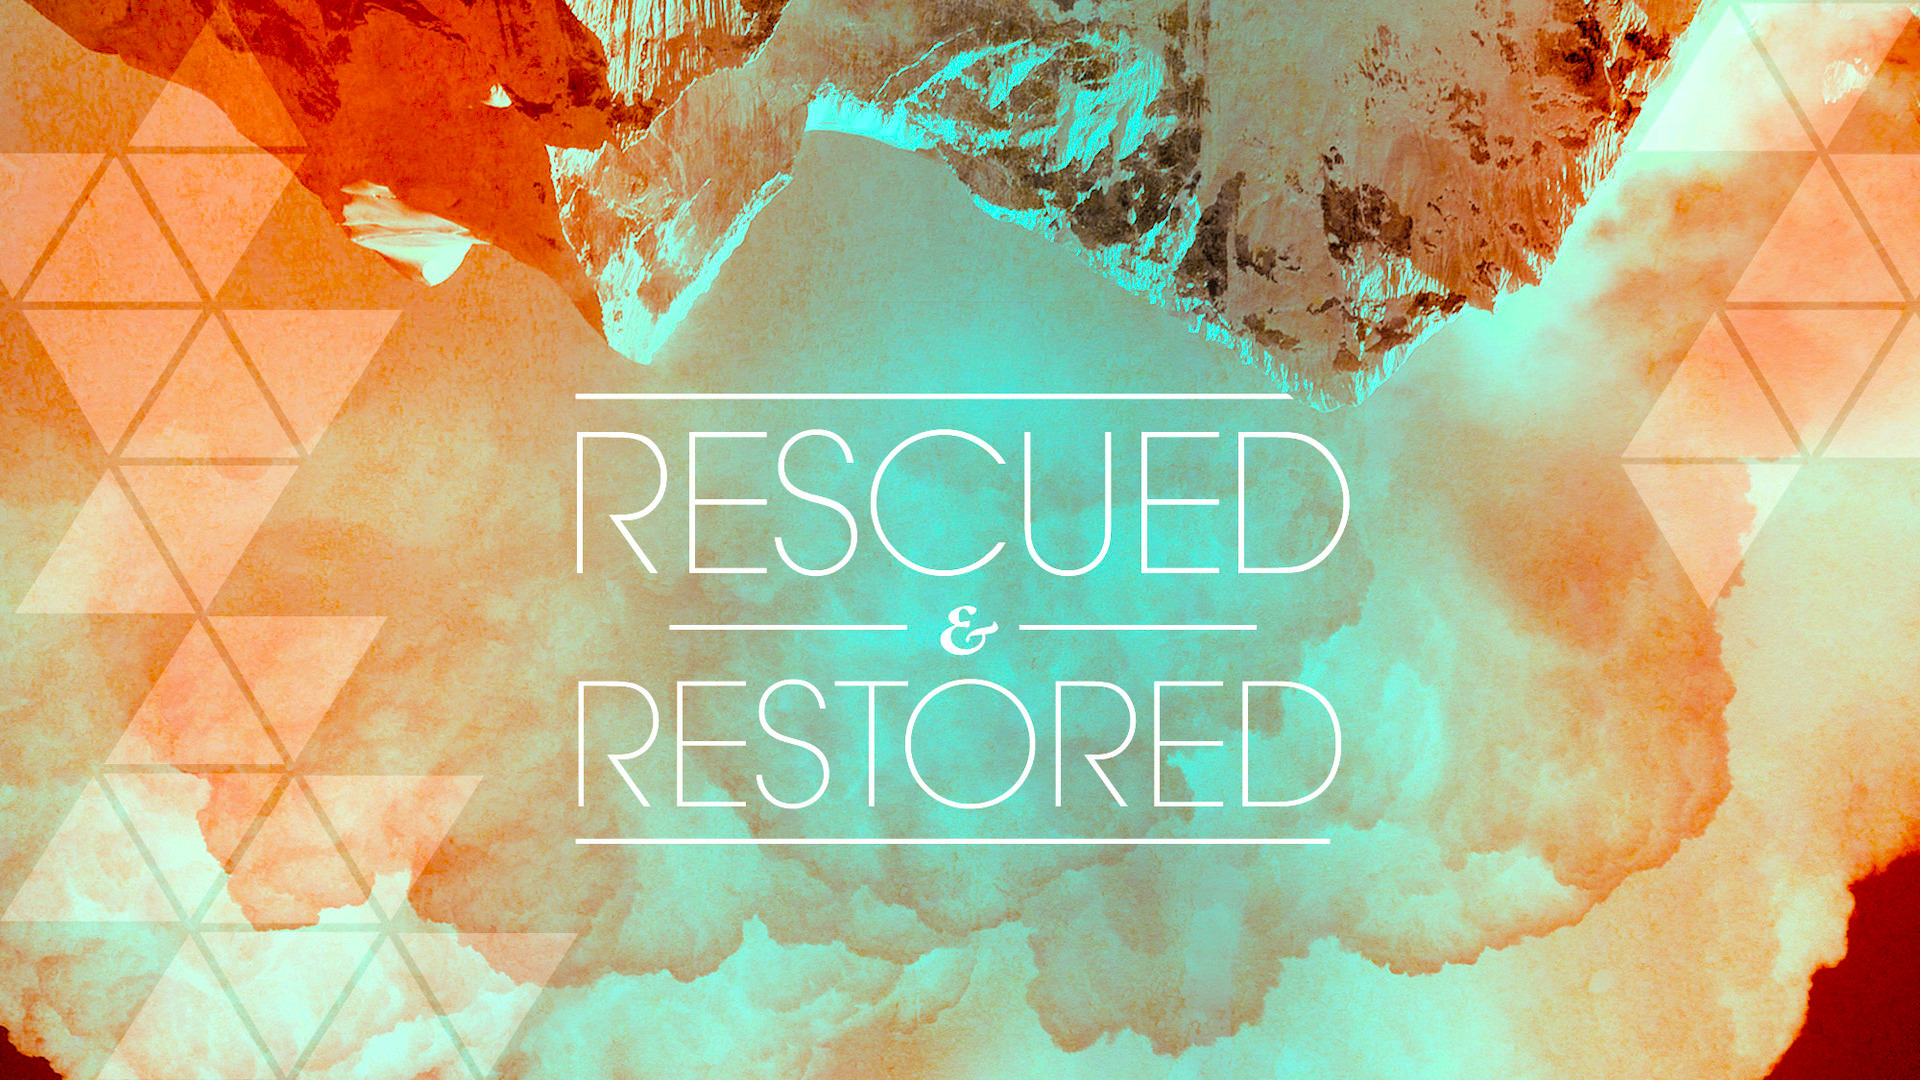 07-03-16 | Rescued & Restored | Warning! | Mark Anderson